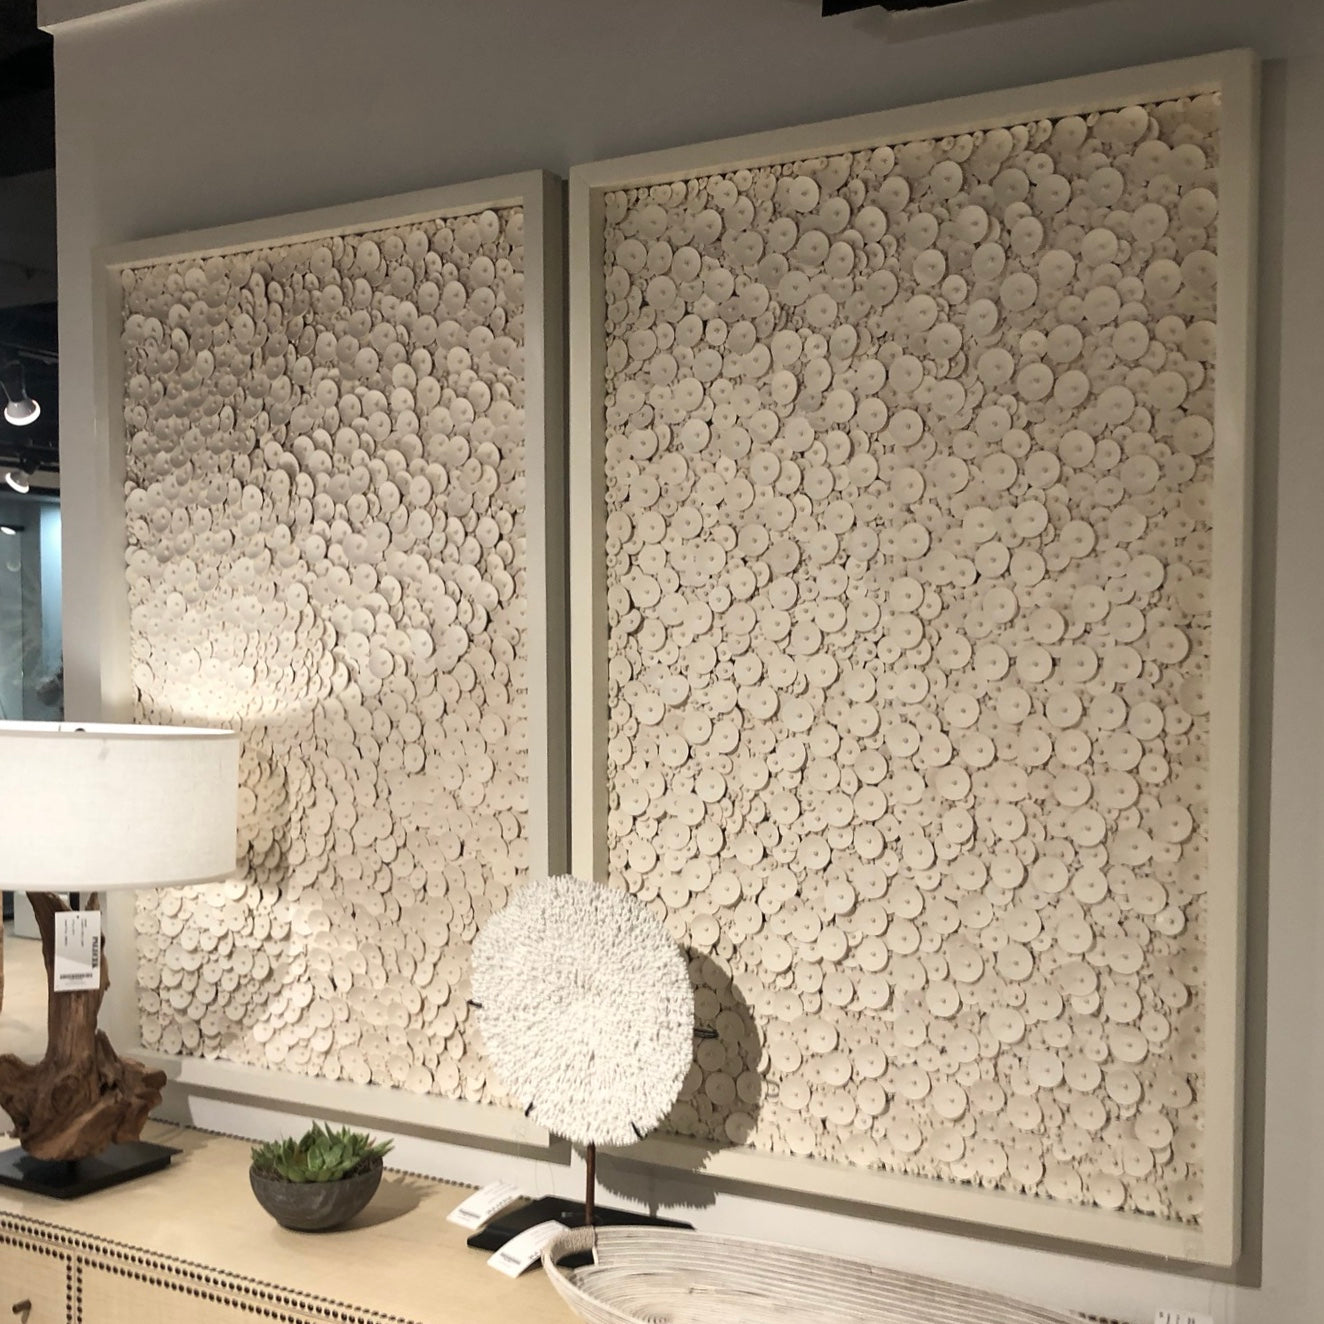 Marble texture Coco Chanel - Wall Art, Hanging Wall Decor, Home Decor -  Arteebo